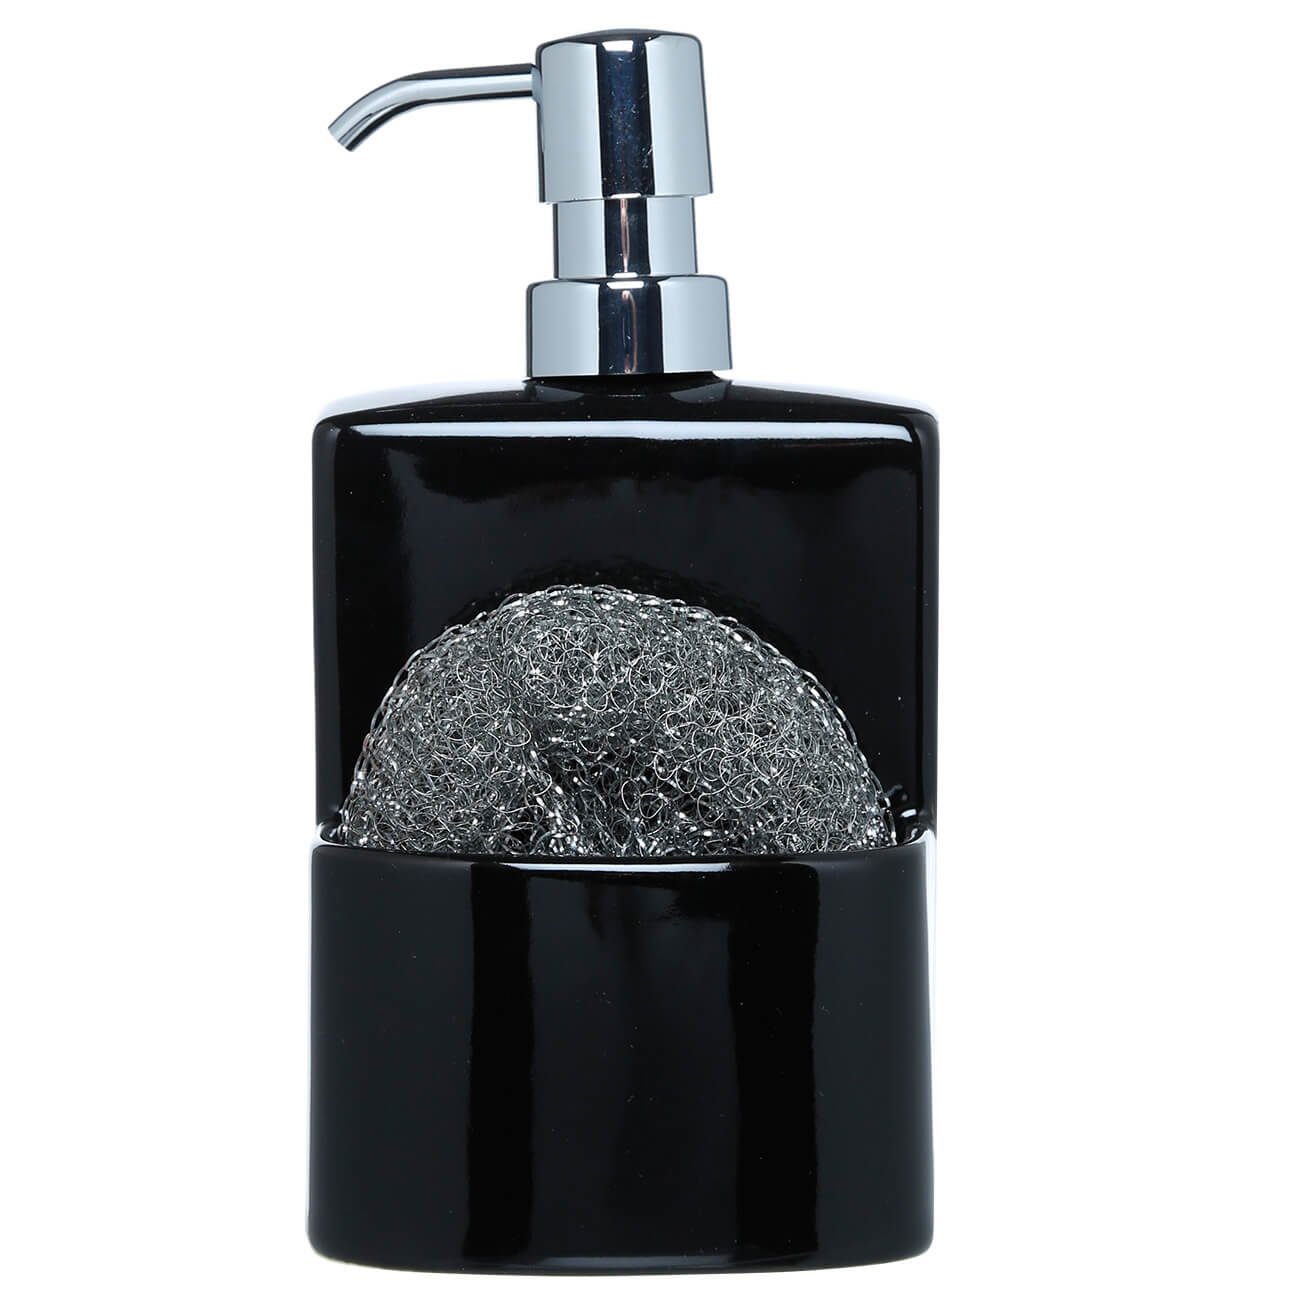 Detergent dispenser, 450 ml, Organizer, with Sponge, Ceramic, Black, Keeping изображение № 1